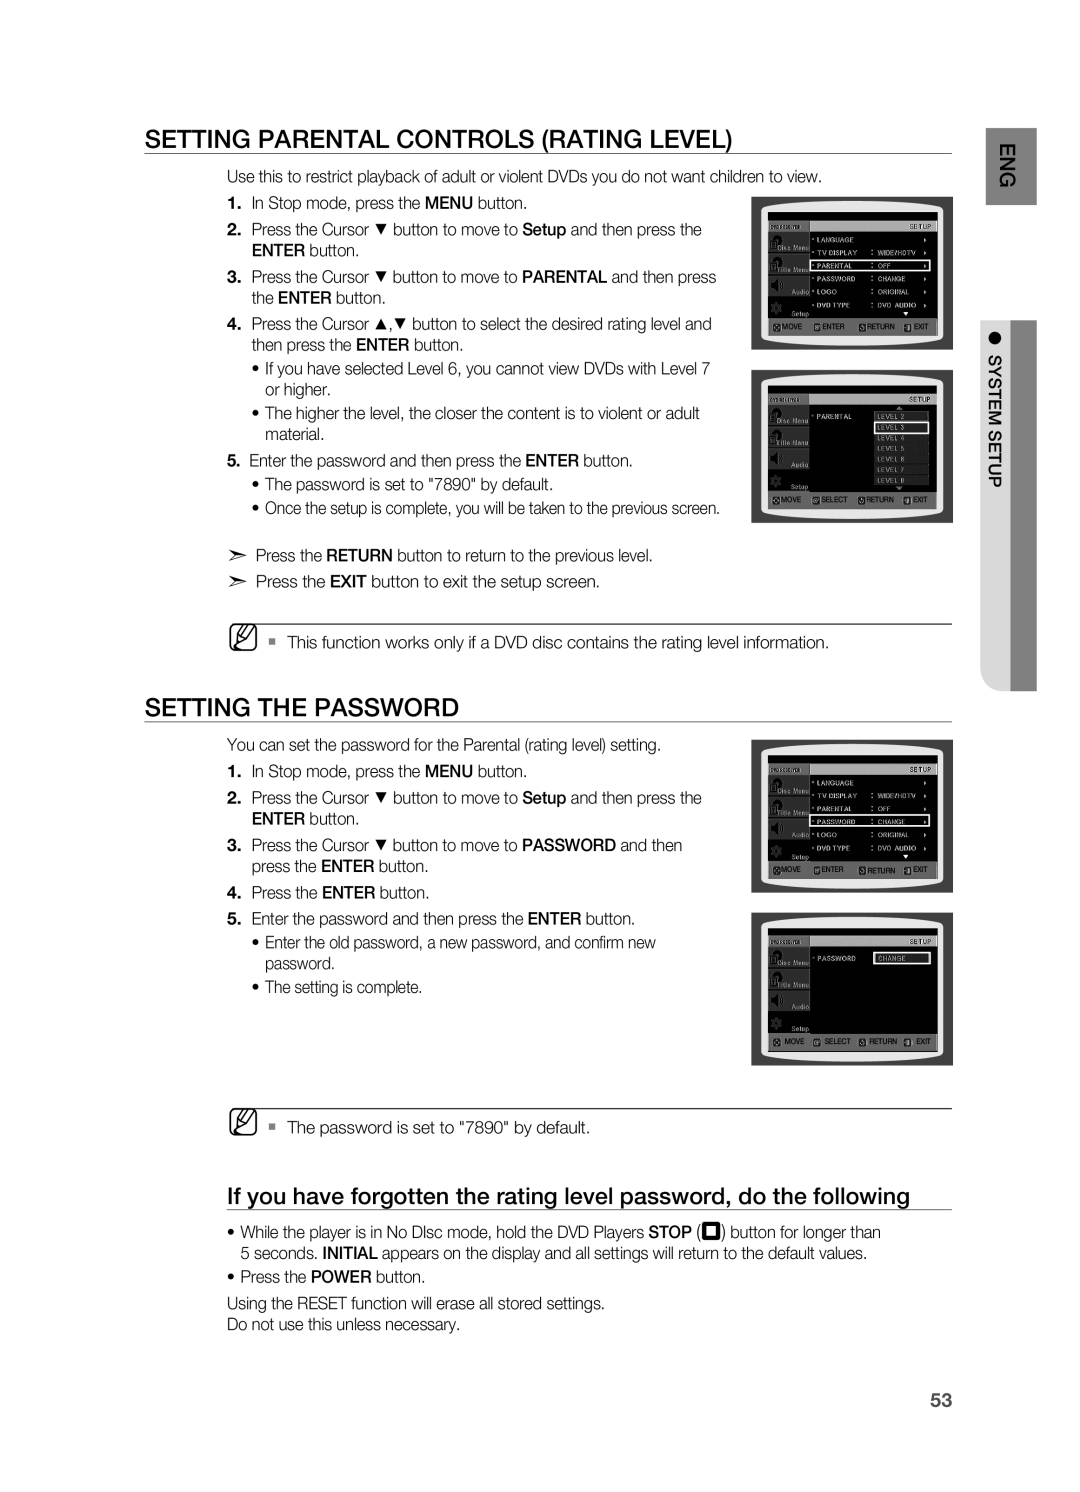 Samsung HT-TZ312 manual Setting Parental Controls Rating Level, Setting the Password 